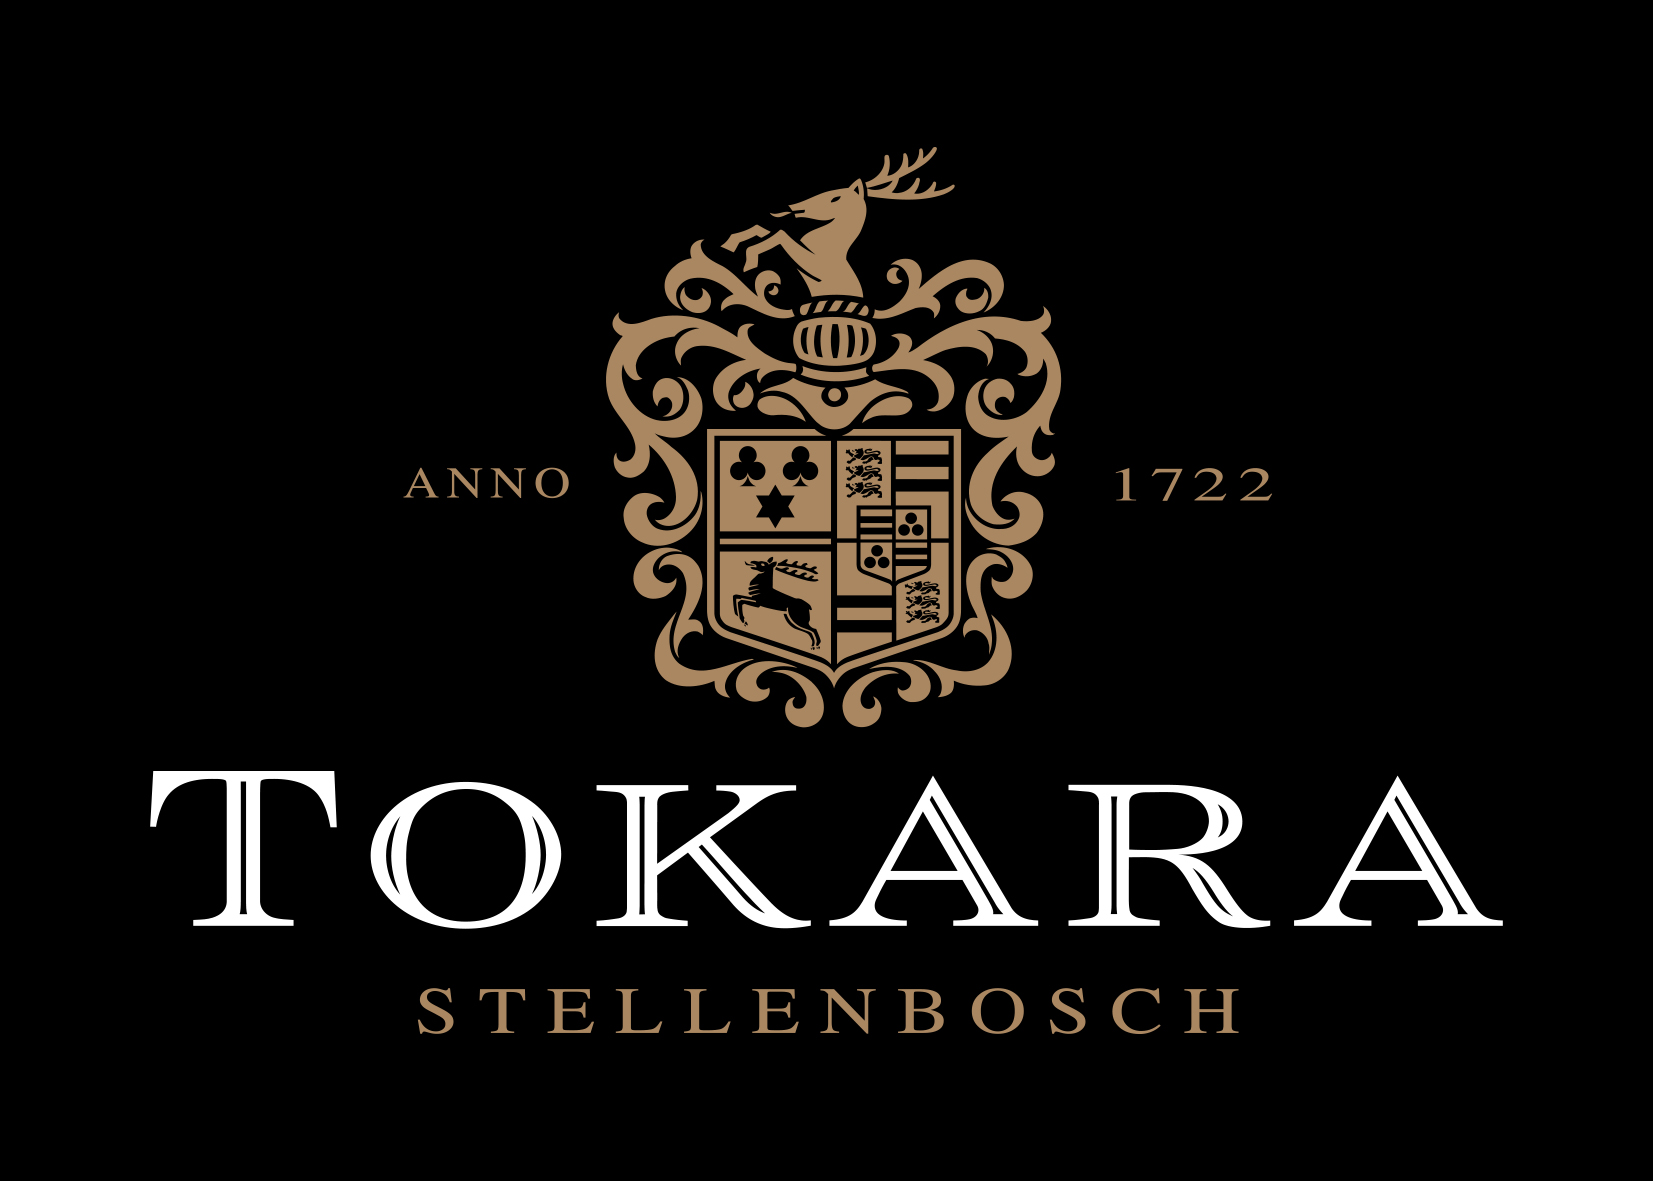 Tokara Wine Estate